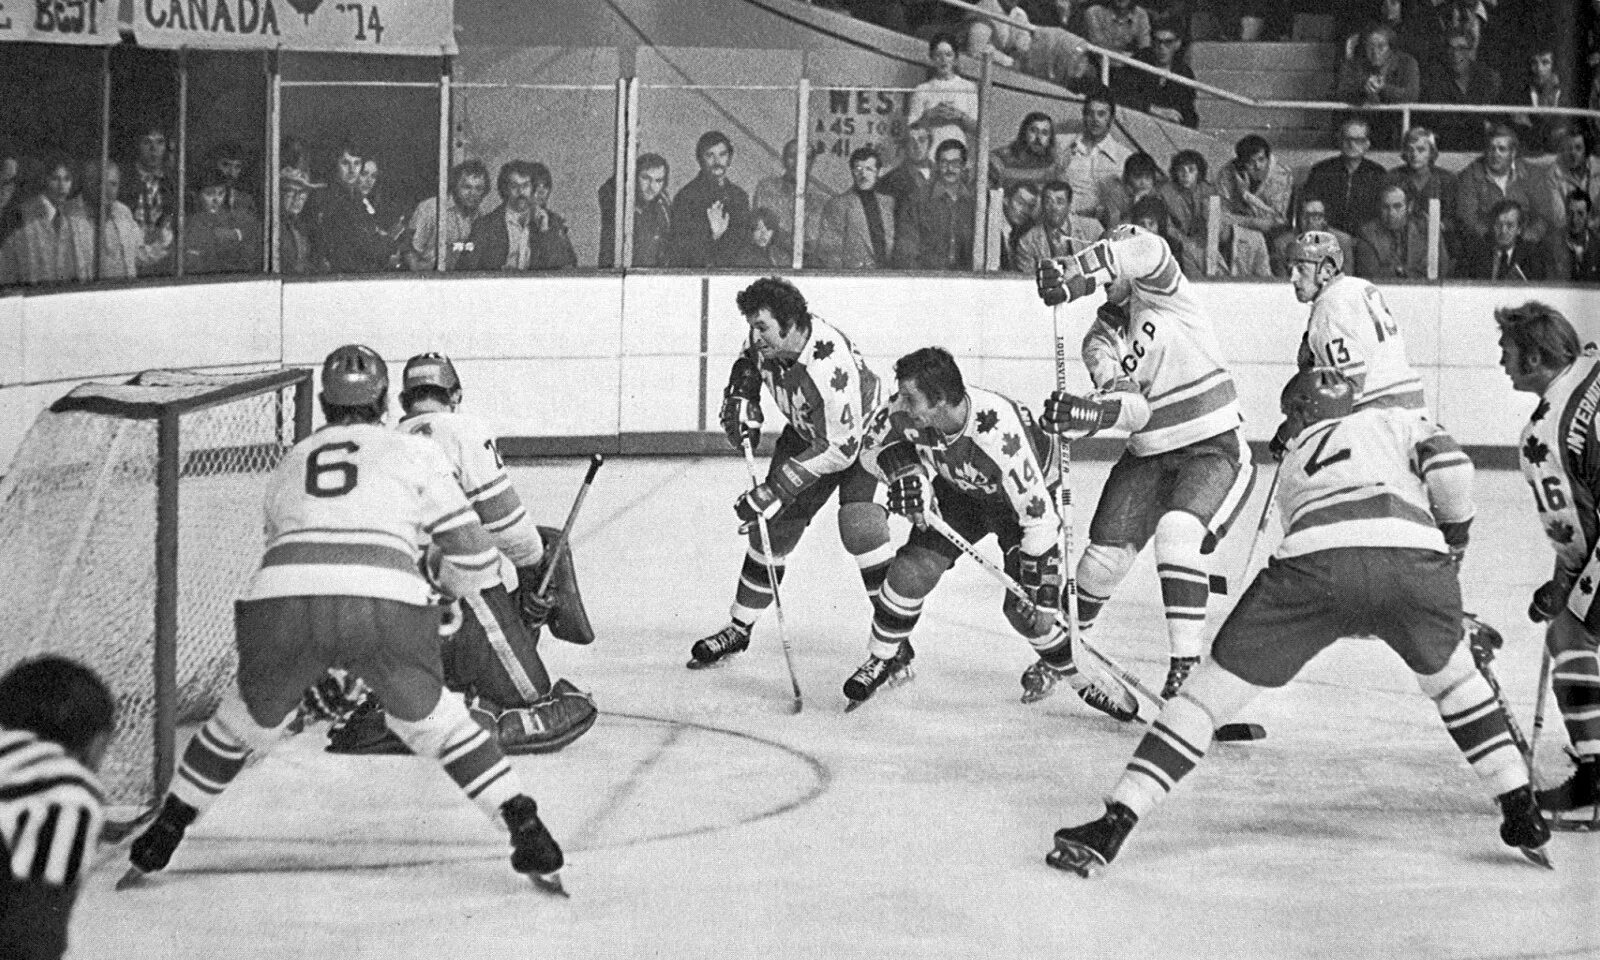 Какая страна 1974 году. Суперсерия СССР Канада 1974. Хоккей 1974 СССР Канада. Канада суперсерия 1972. Бобби Халл суперсерия 1974.